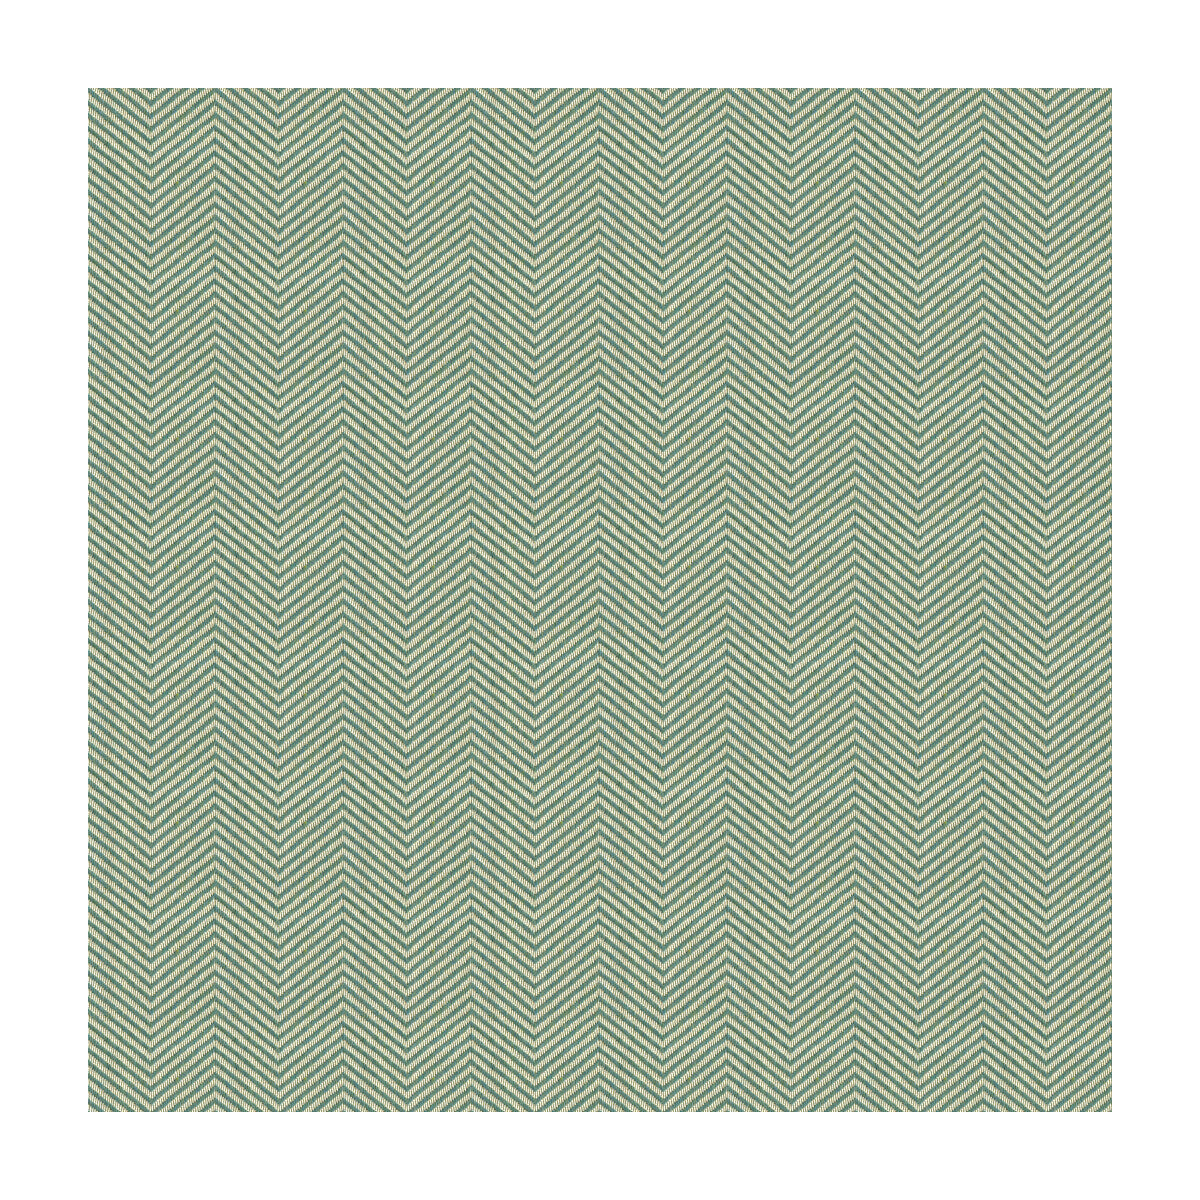 Kravet Design fabric in 34234-1516 color - pattern 34234.1516.0 - by Kravet Design in the Sunbrella collection